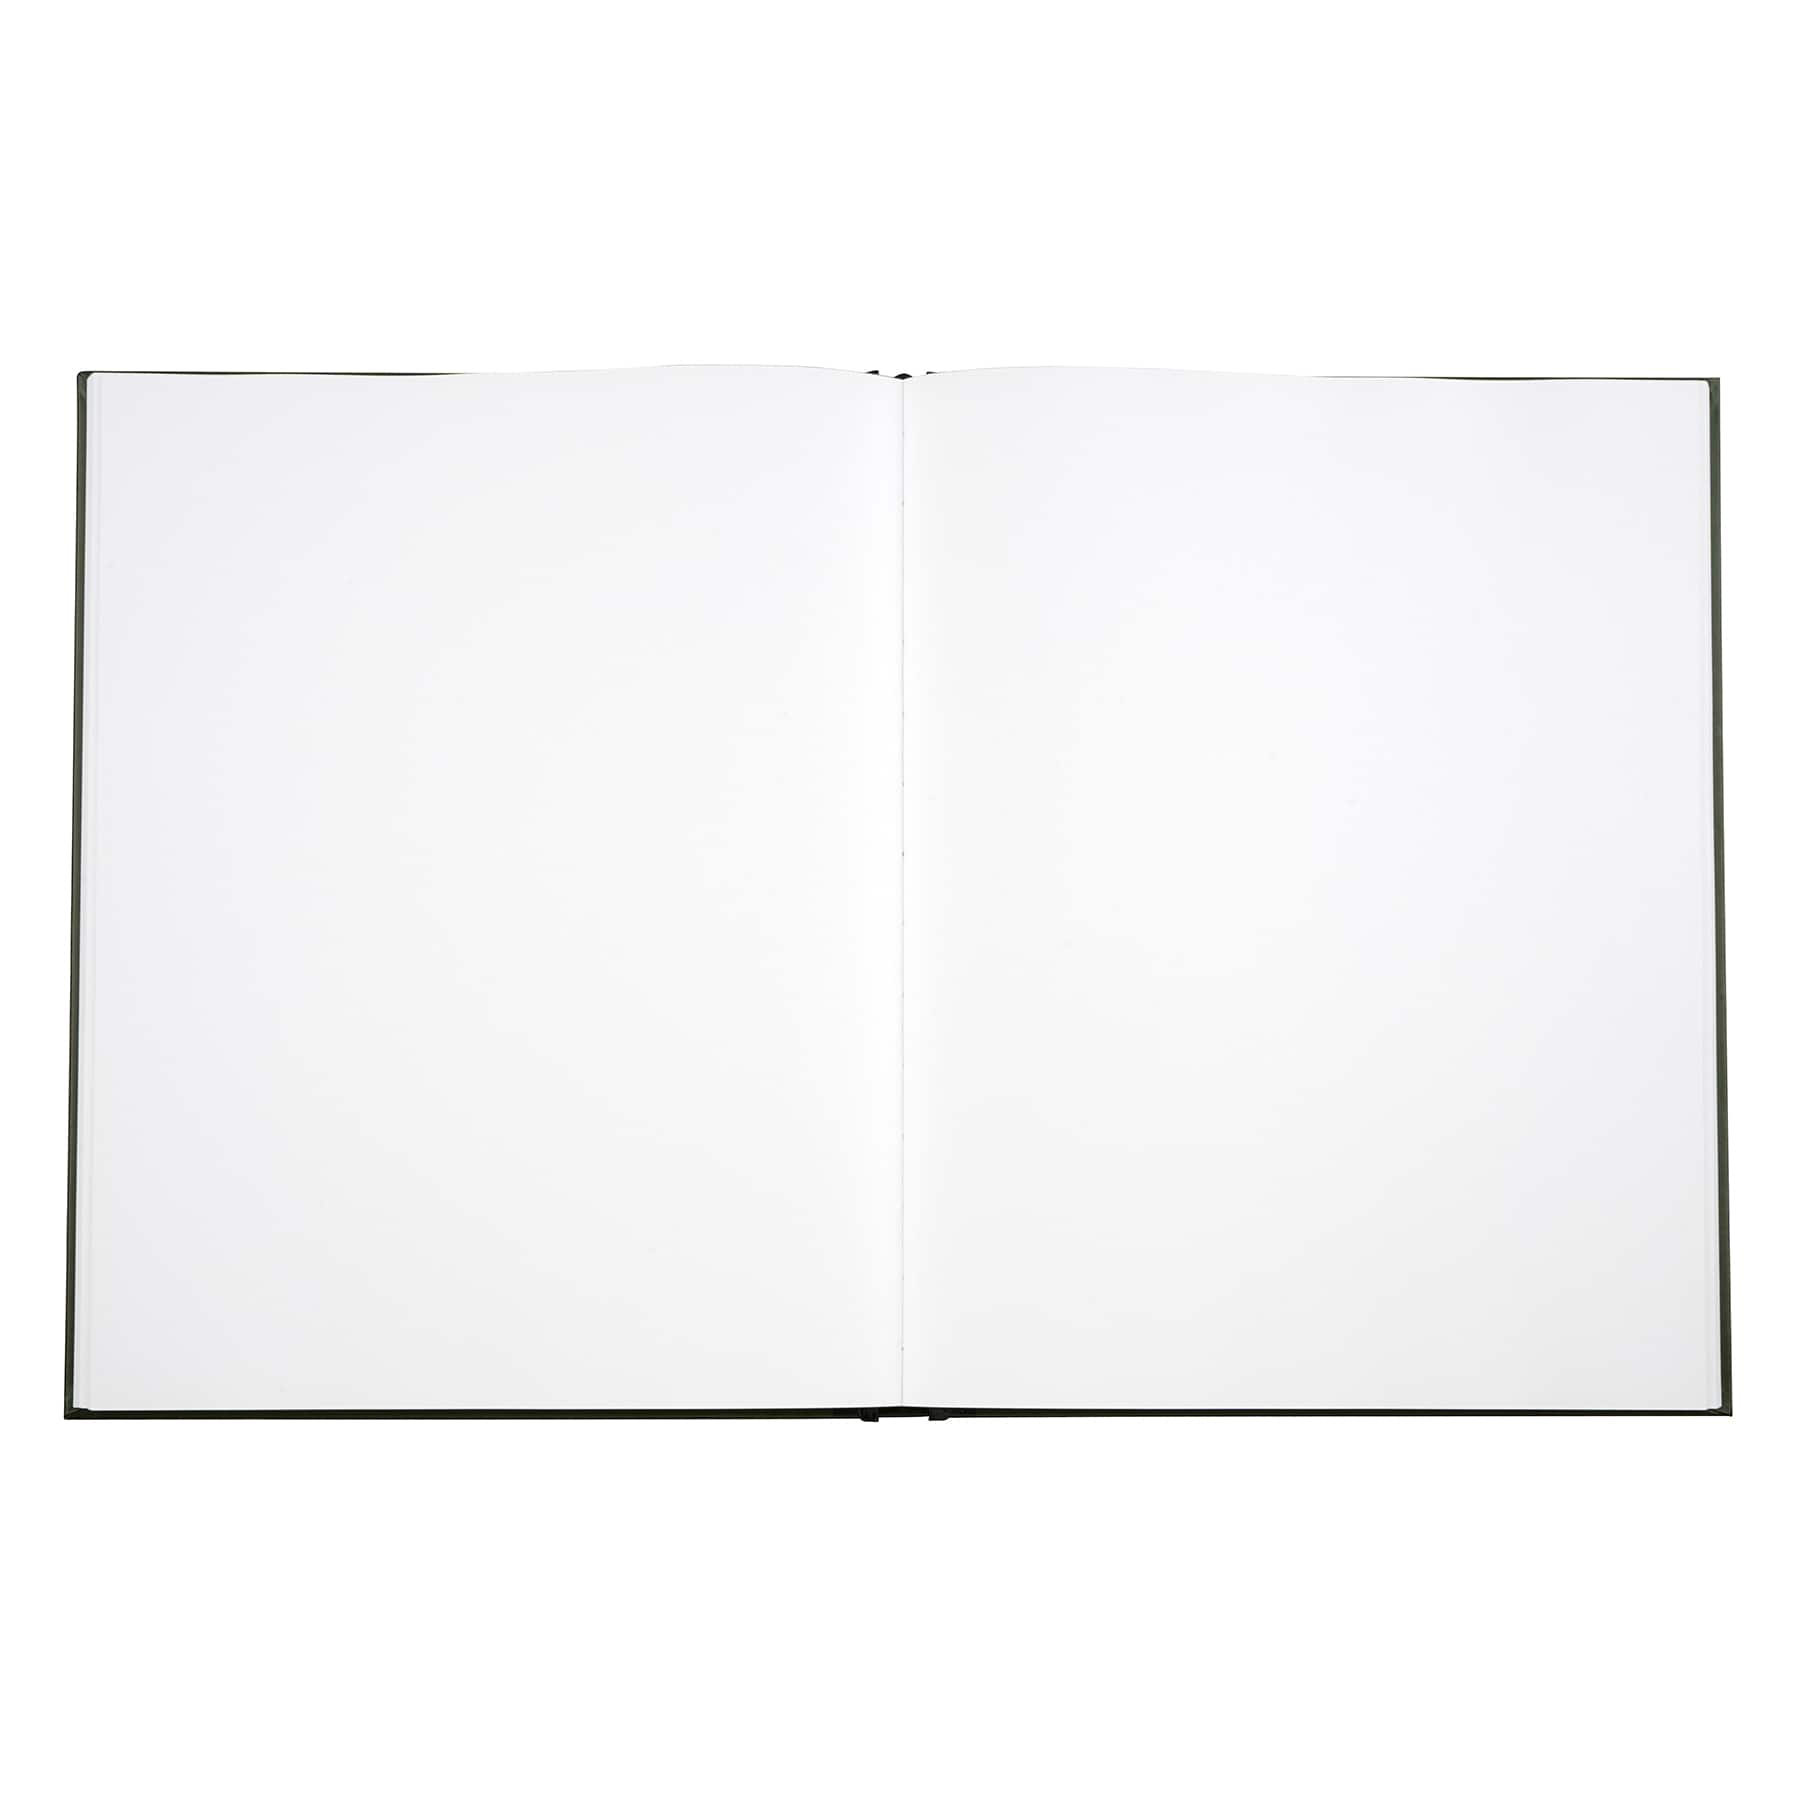 Artist's Loft, Office, New Artists Loft Hardcover Sketchbook 1 Page 85 X  11 Black White Cover